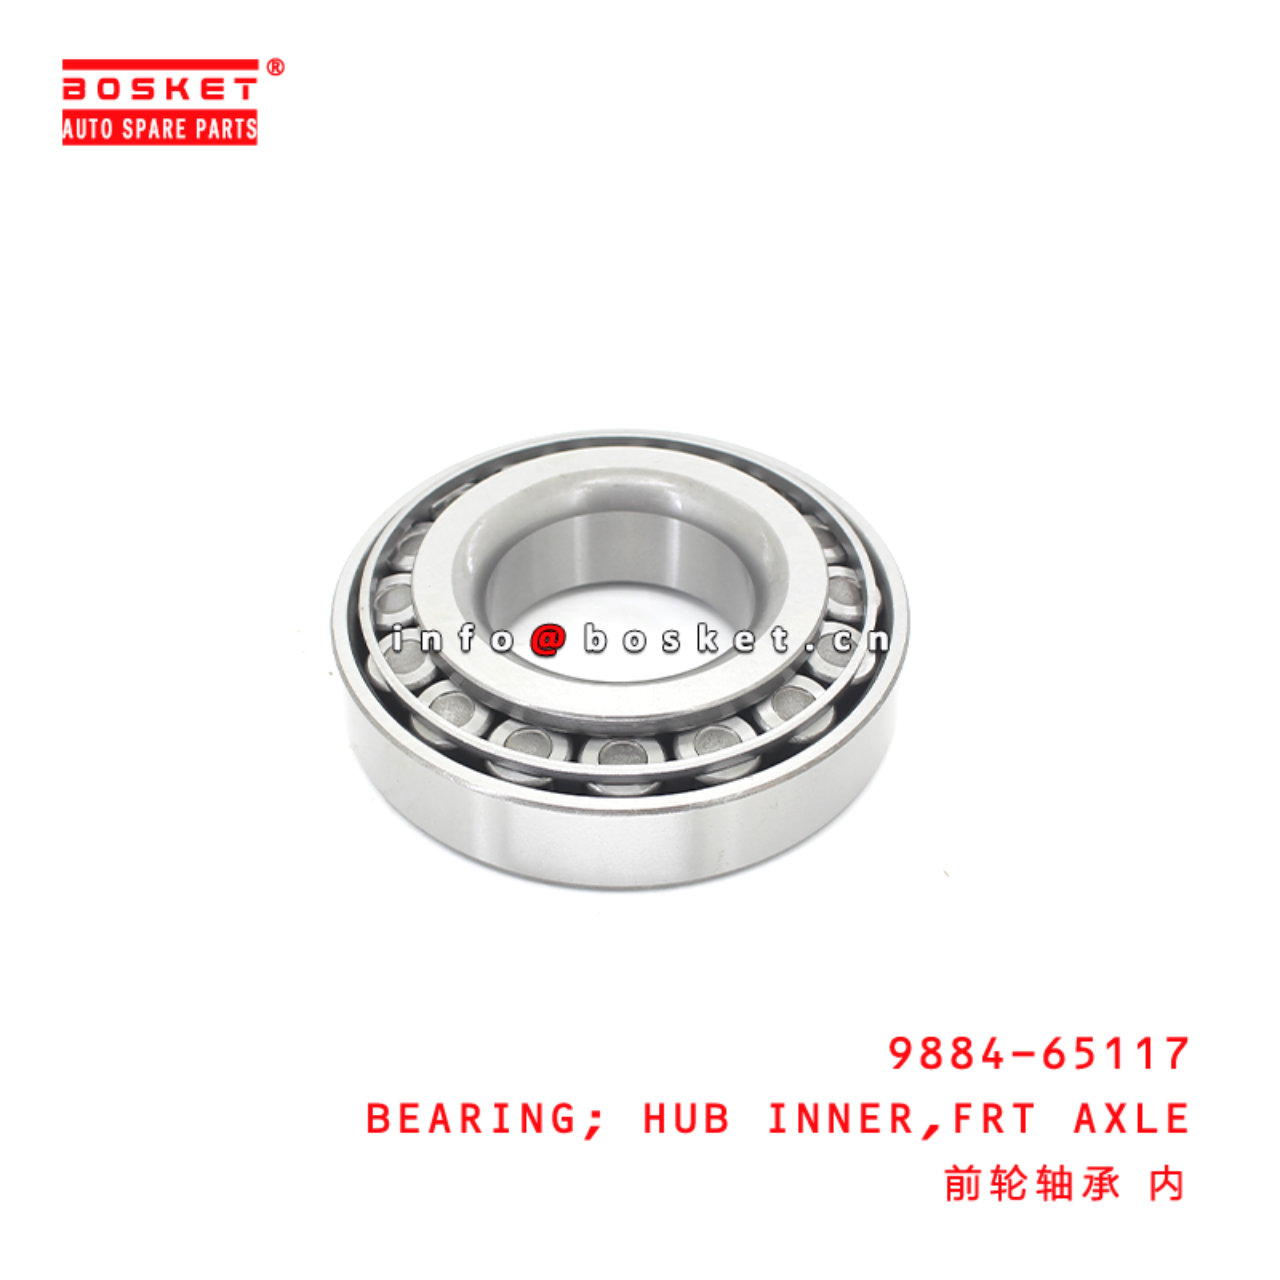 9884-65117 Front Axle Hub Inner Bearing Suitable for ISUZU HINO500